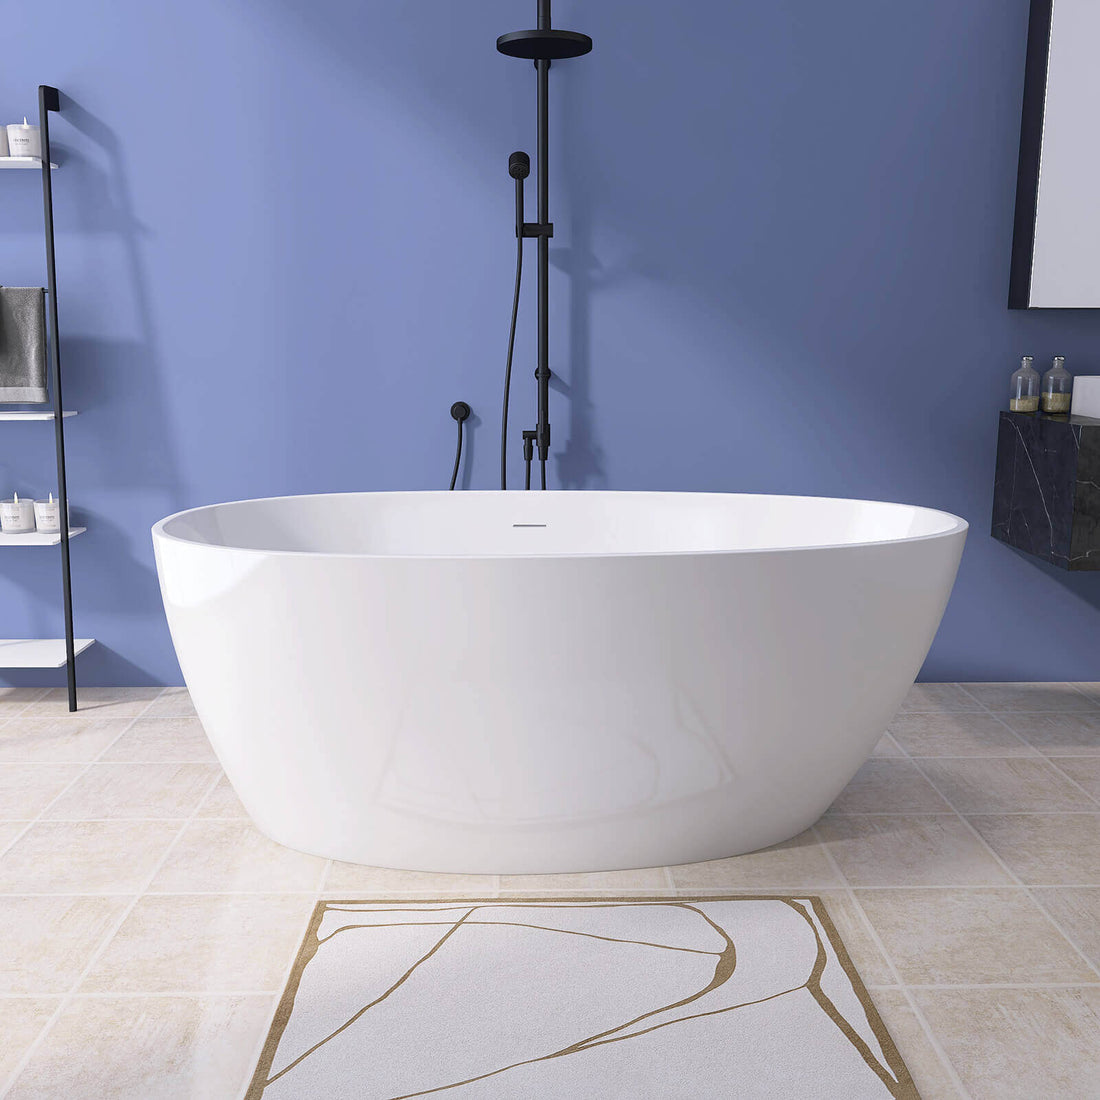 59 Inch Insulated Acrylic Soaking Tub